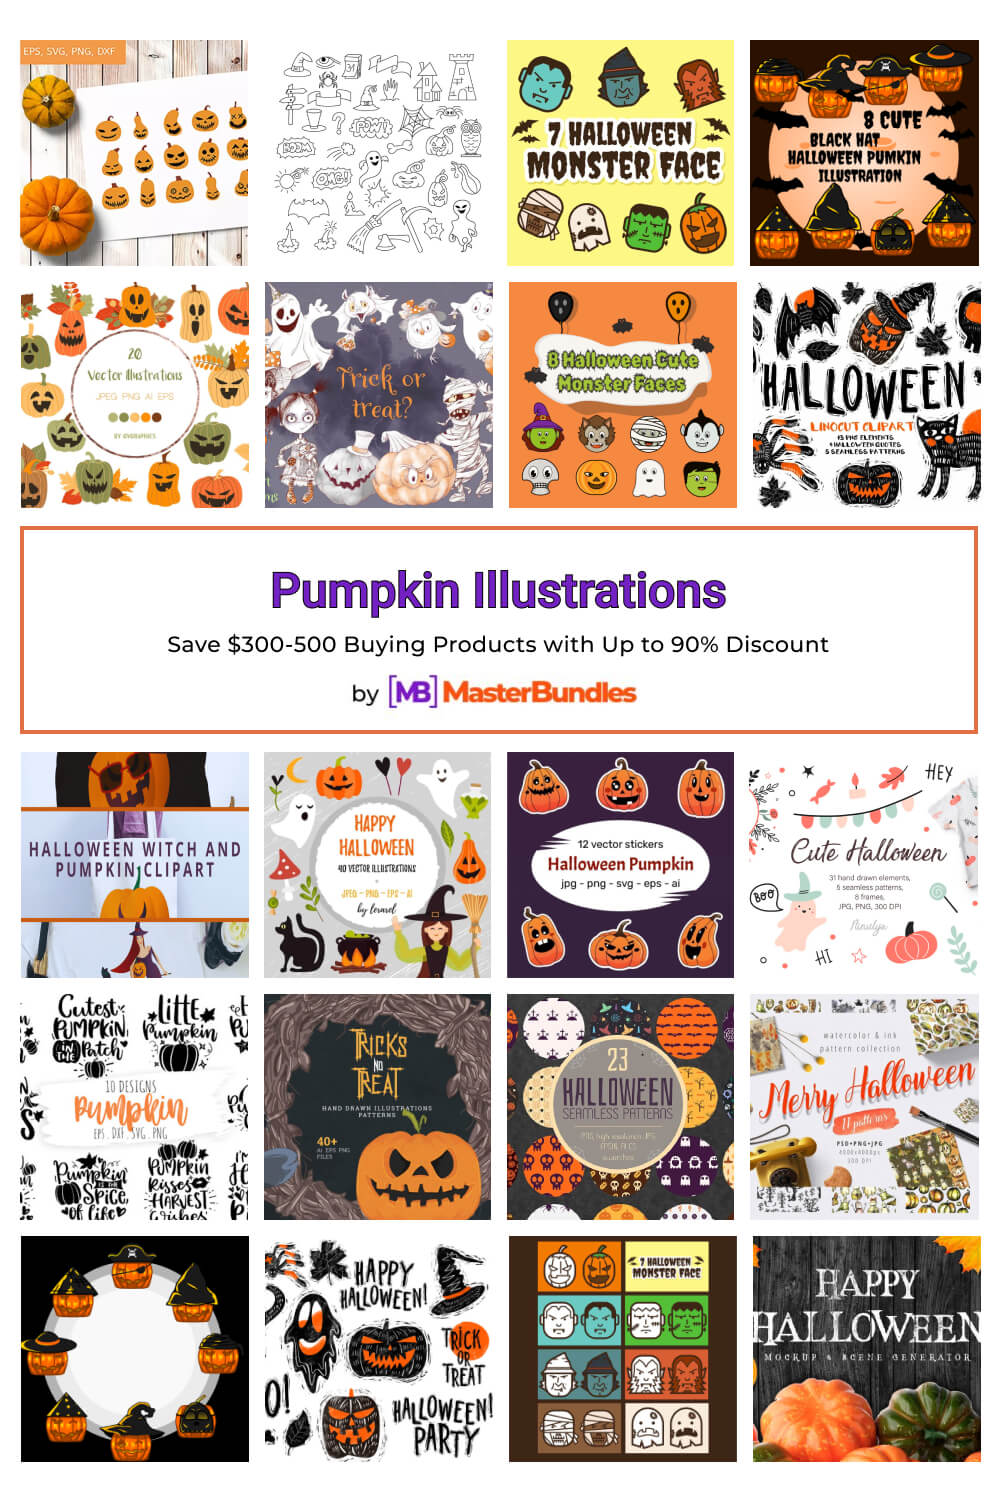 pumpkin illustrations pinterest image.